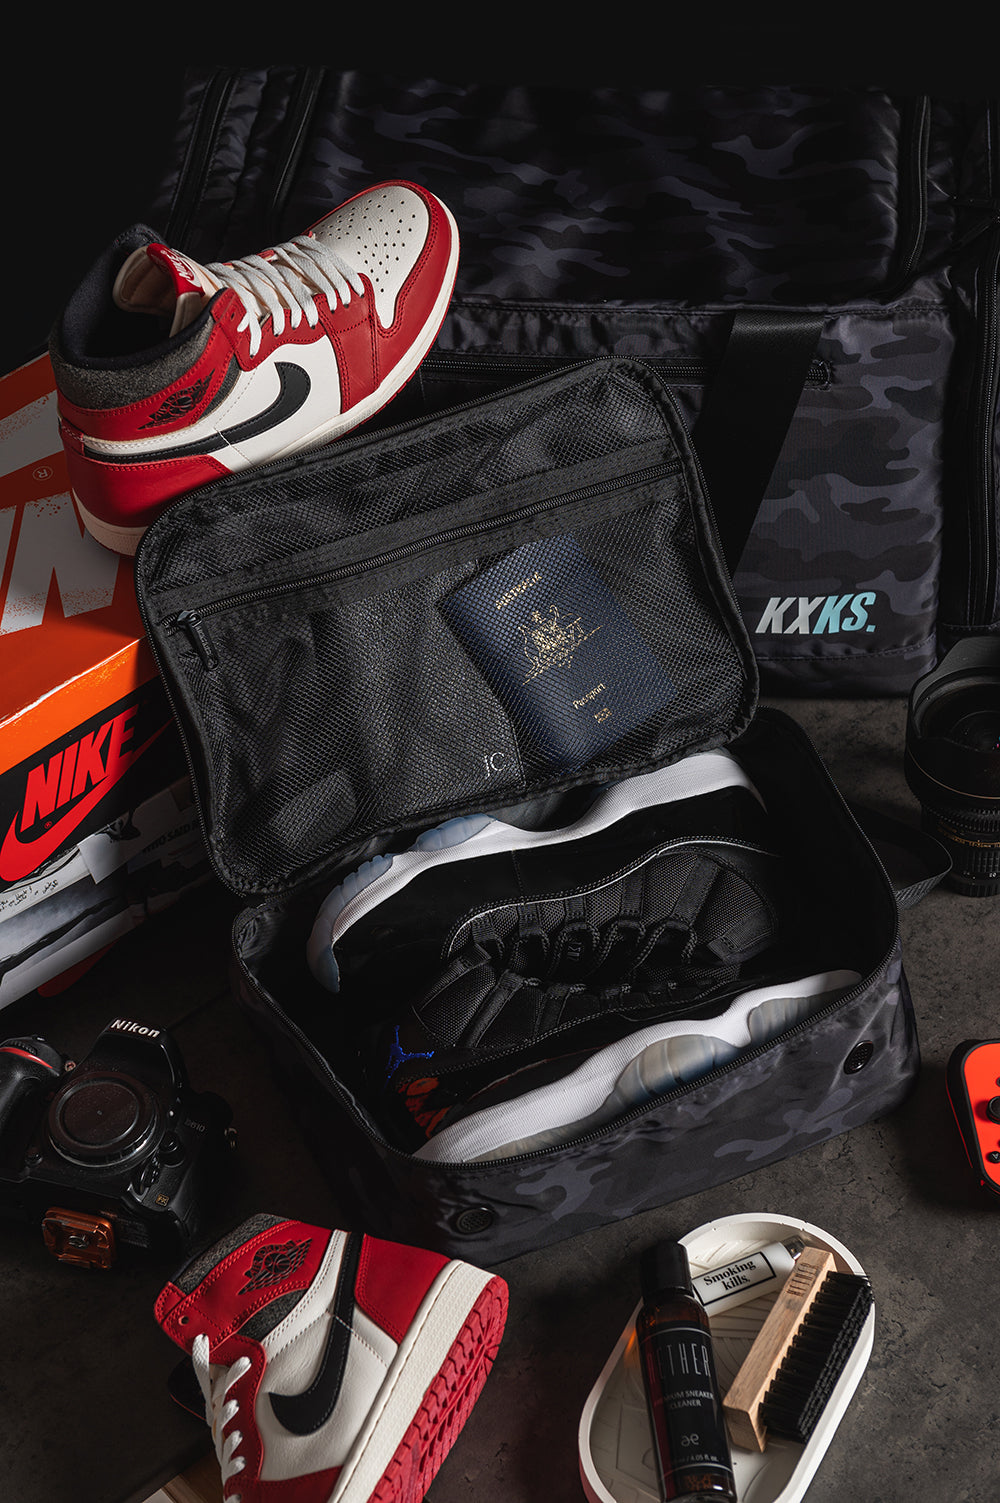 Sneaker Case (Black Camo)